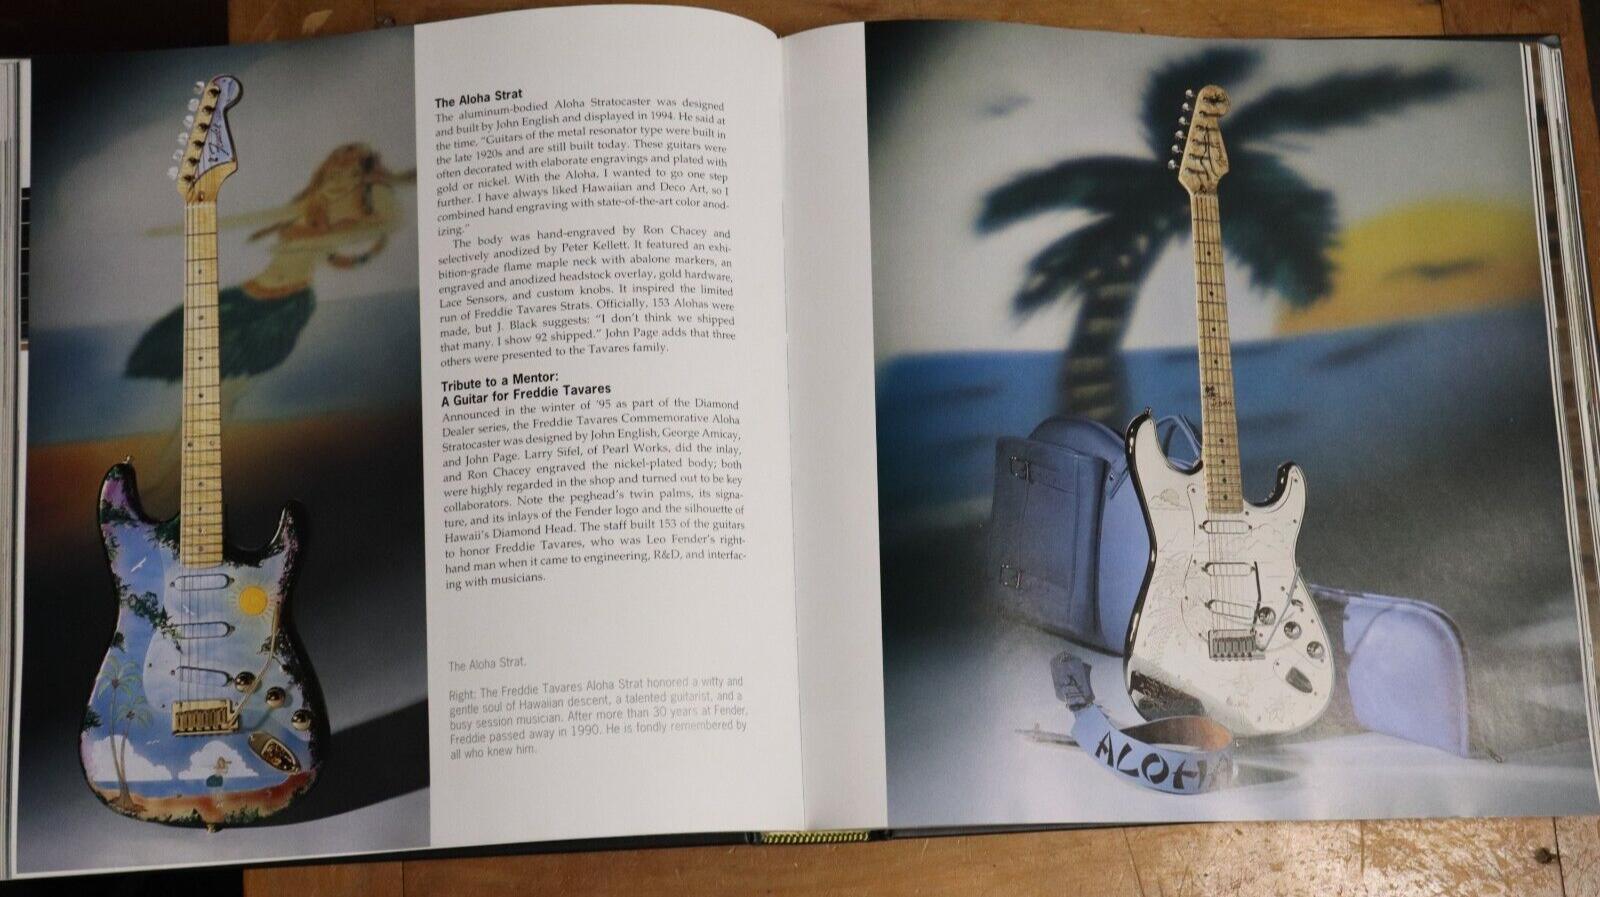 The Dream Factory: Fender Custom Shop Tony Wheeler - 2011 - Fender Guitar Book